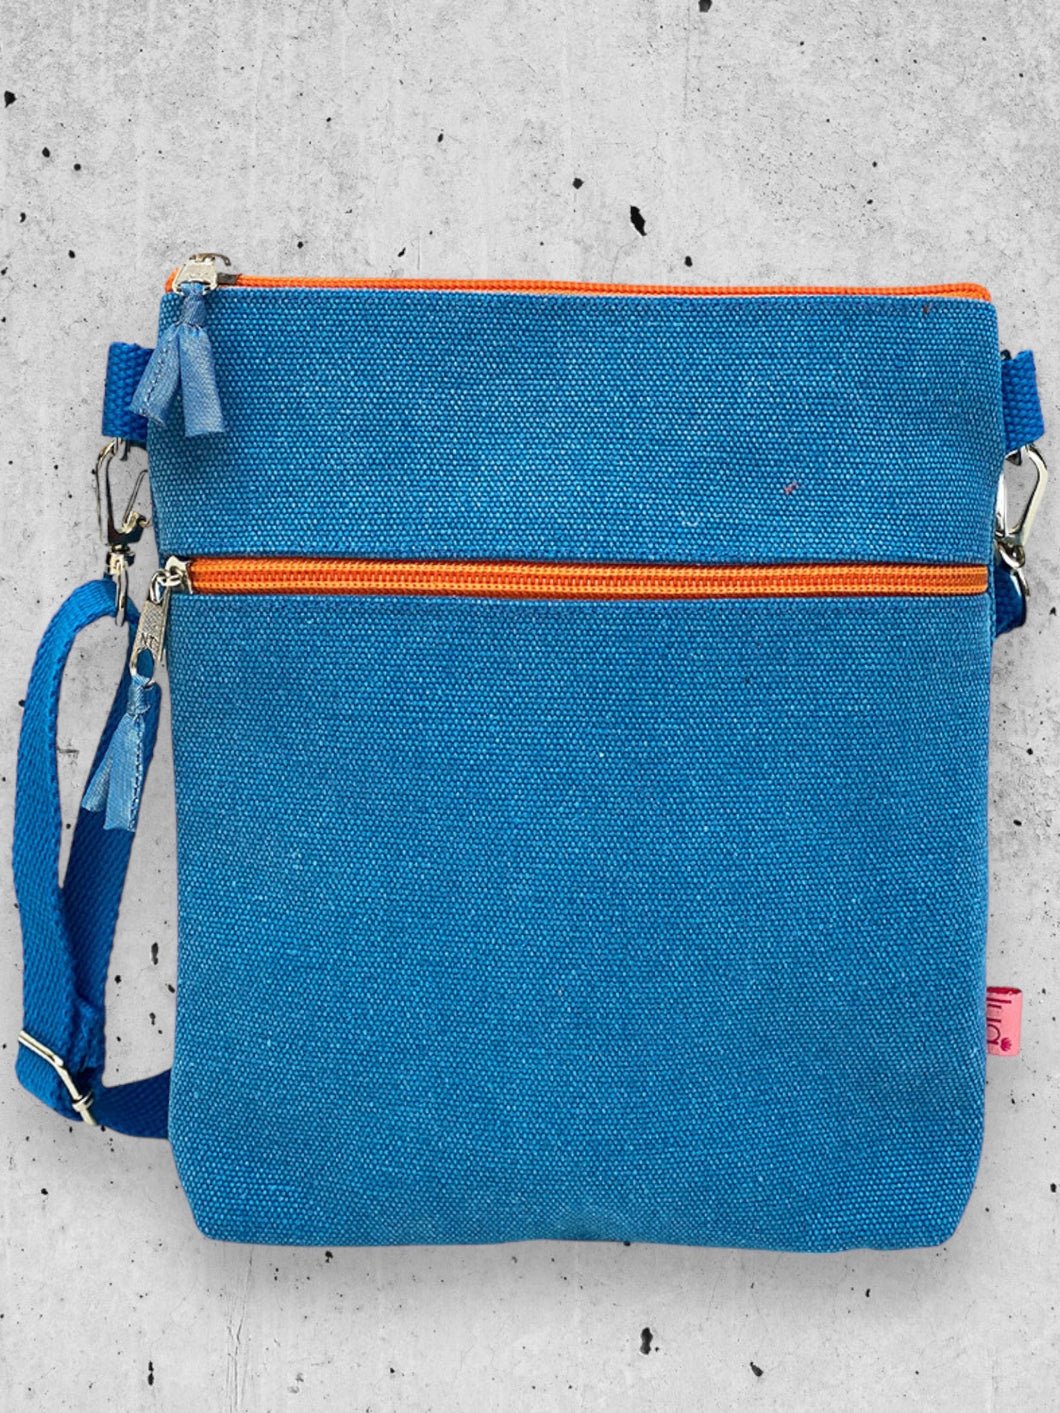 Purse bag (Blue/orange)